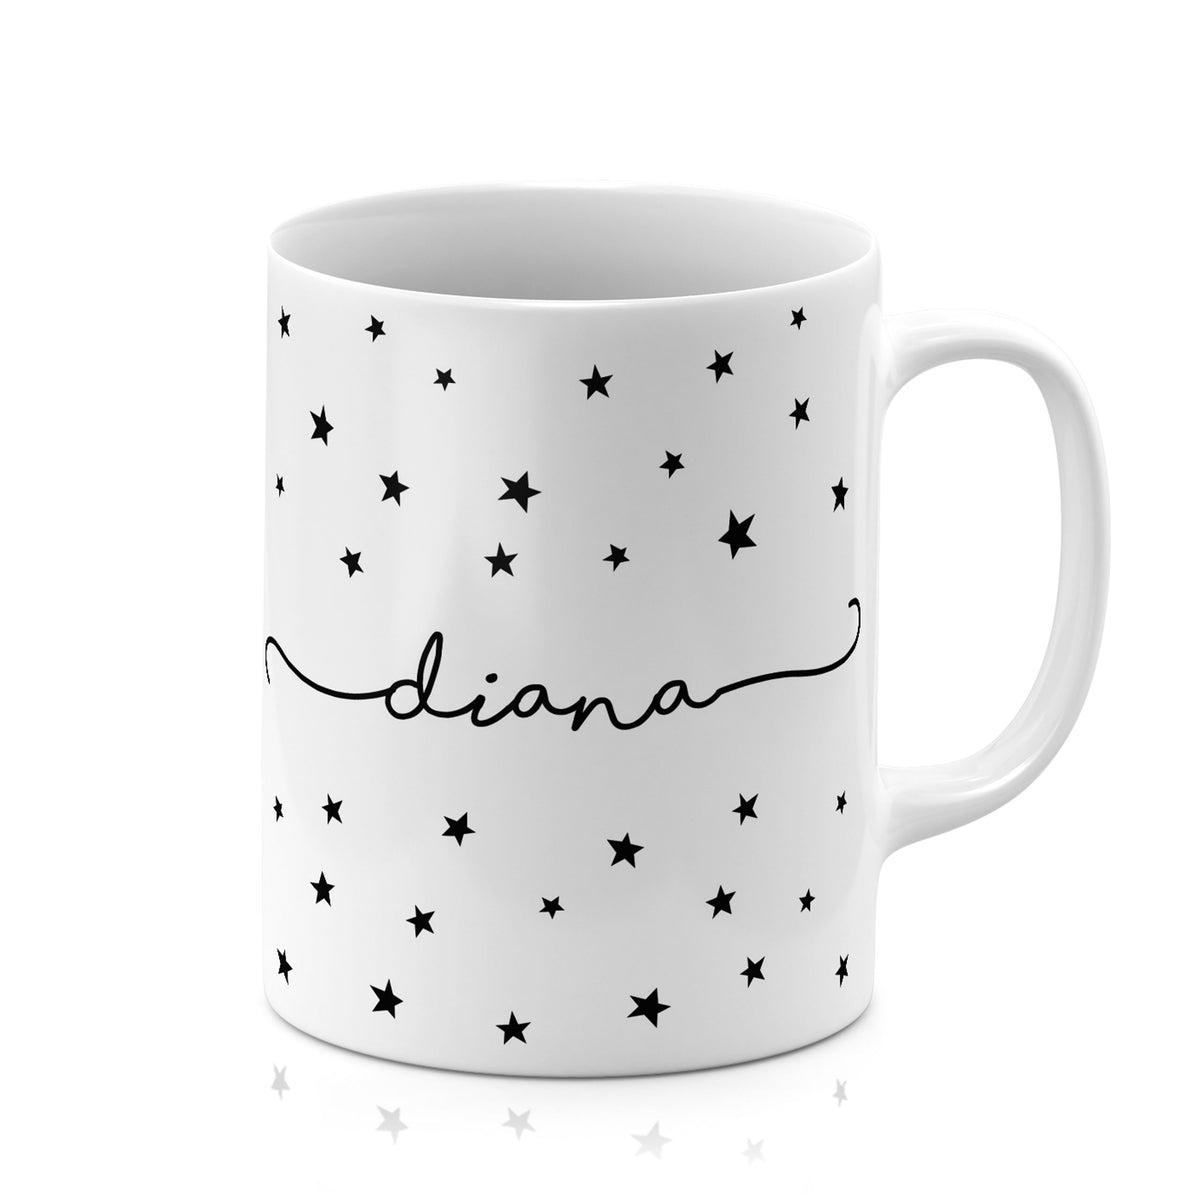 Personalised Ceramic Mug with Name Initials Text Black Stars Handwritten